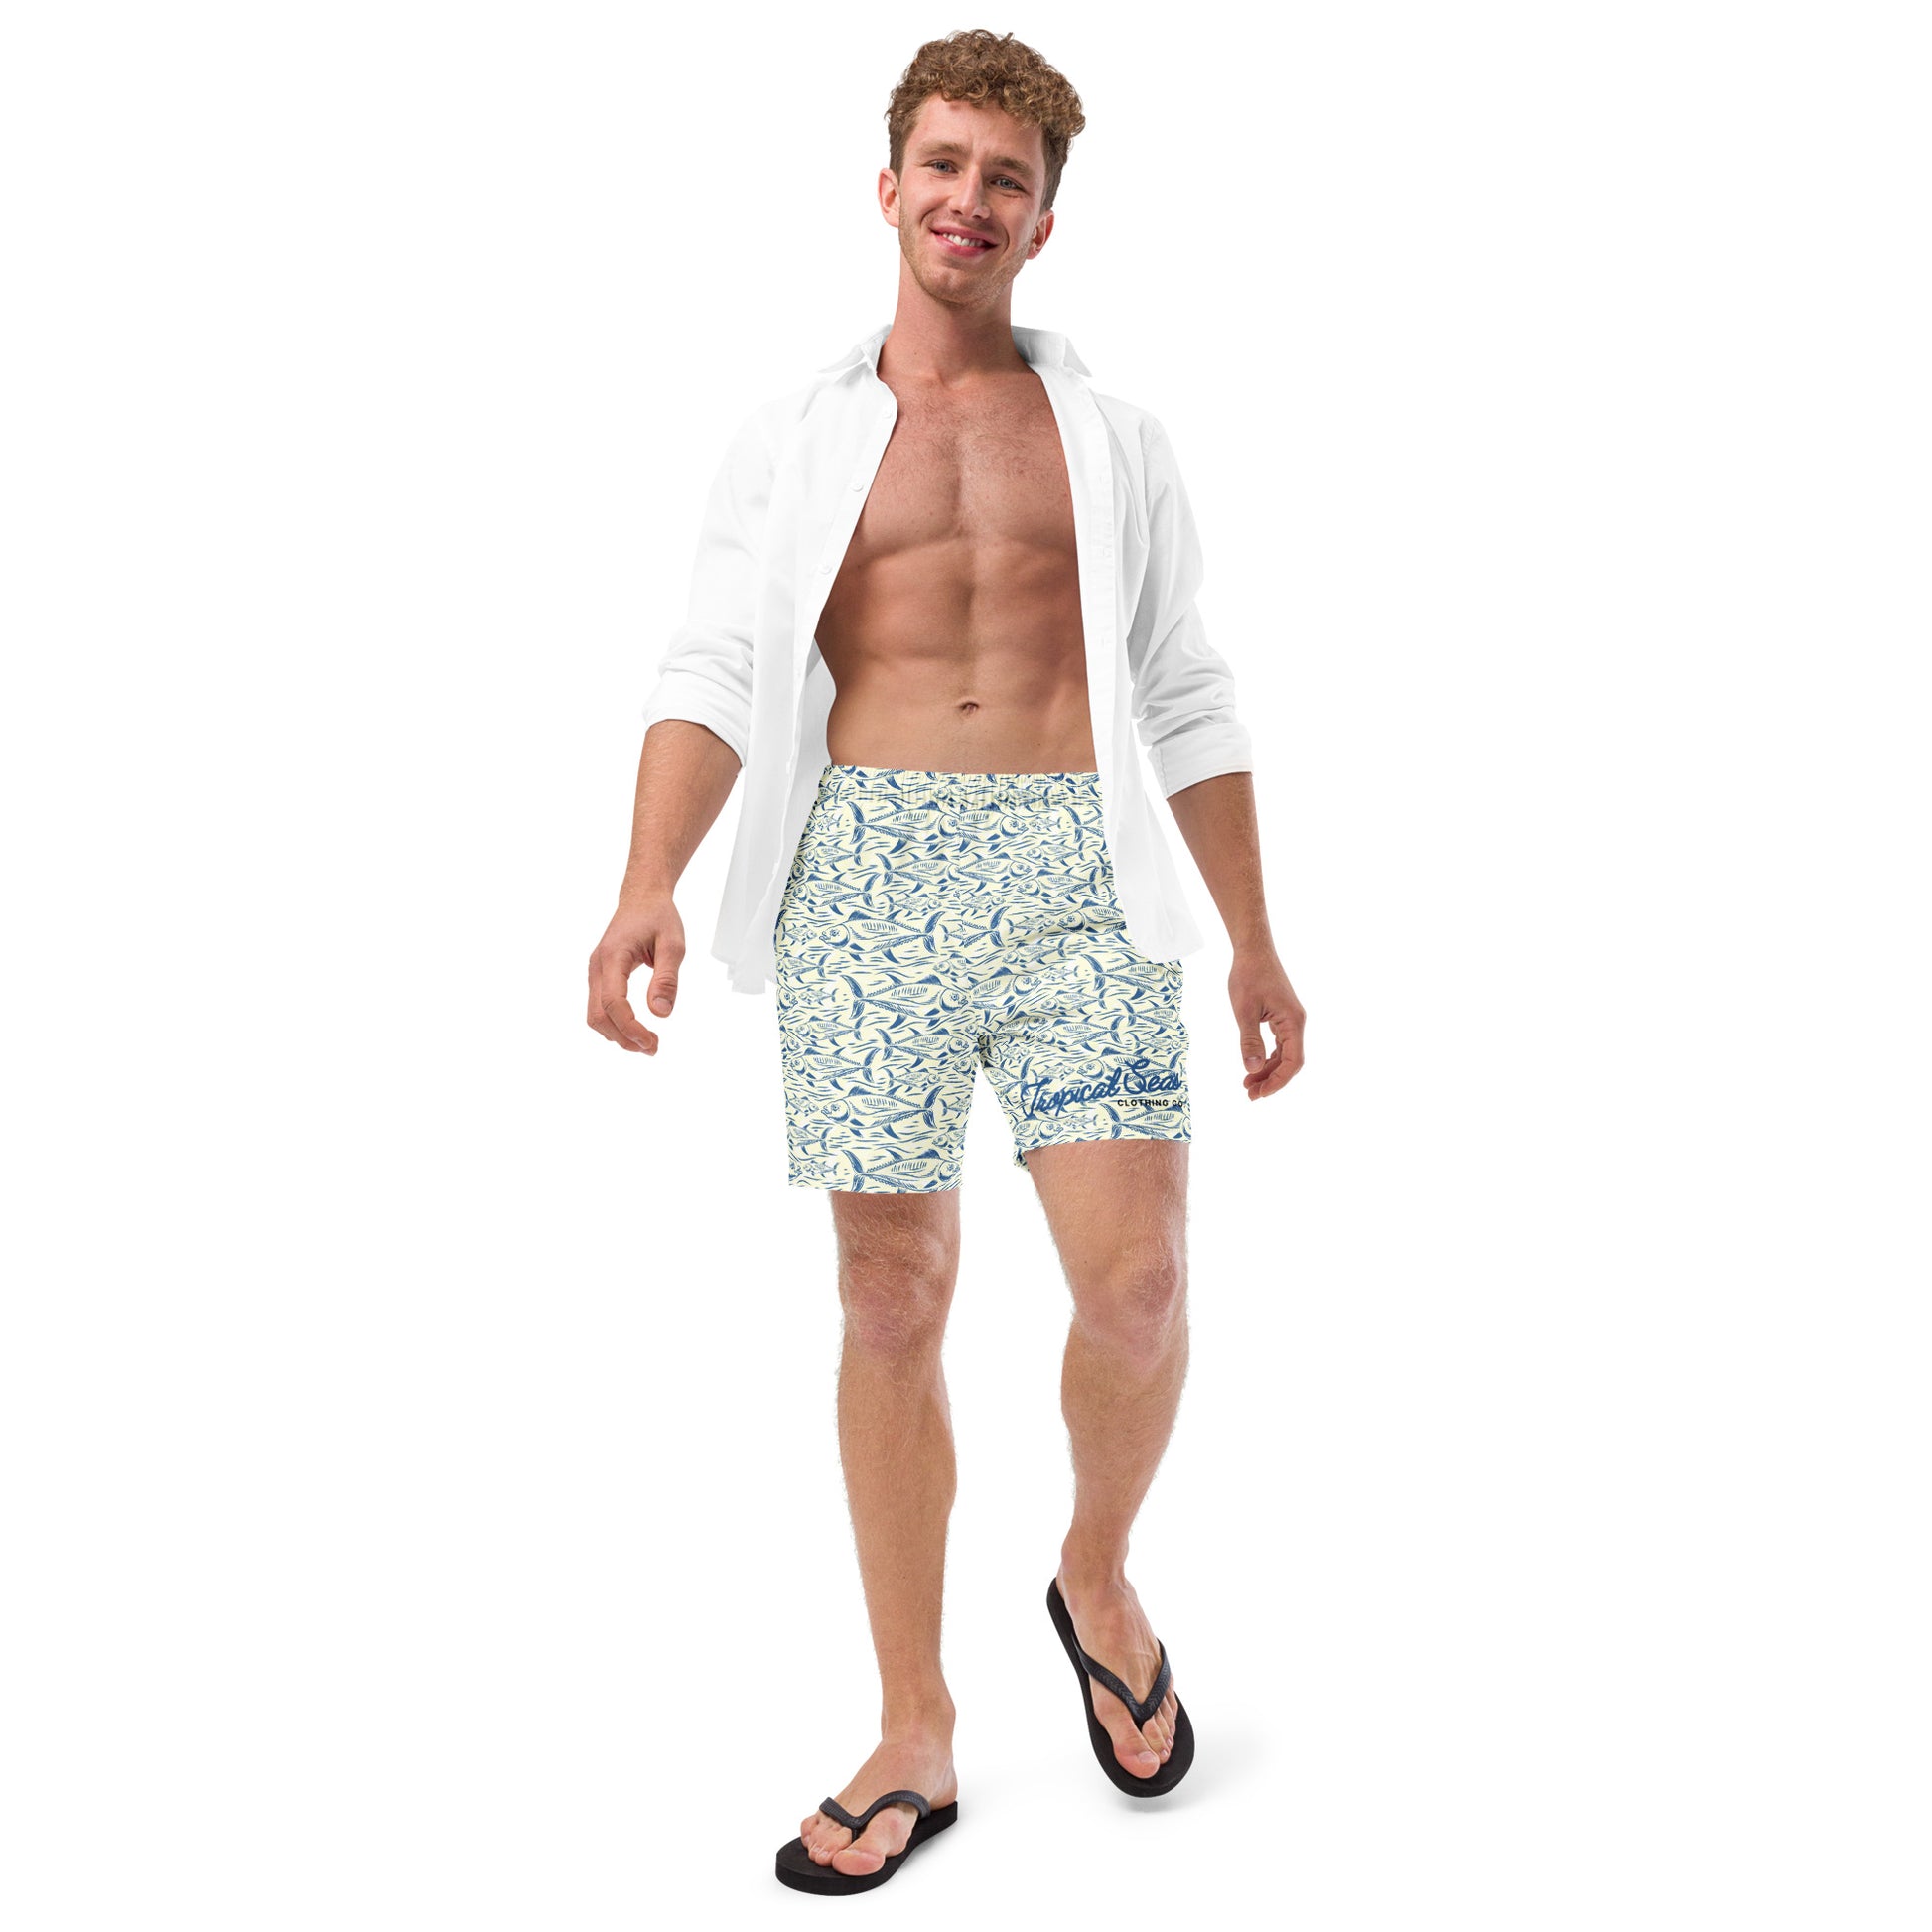 Men's Bonita swim trunks - Tropical Seas Clothing 